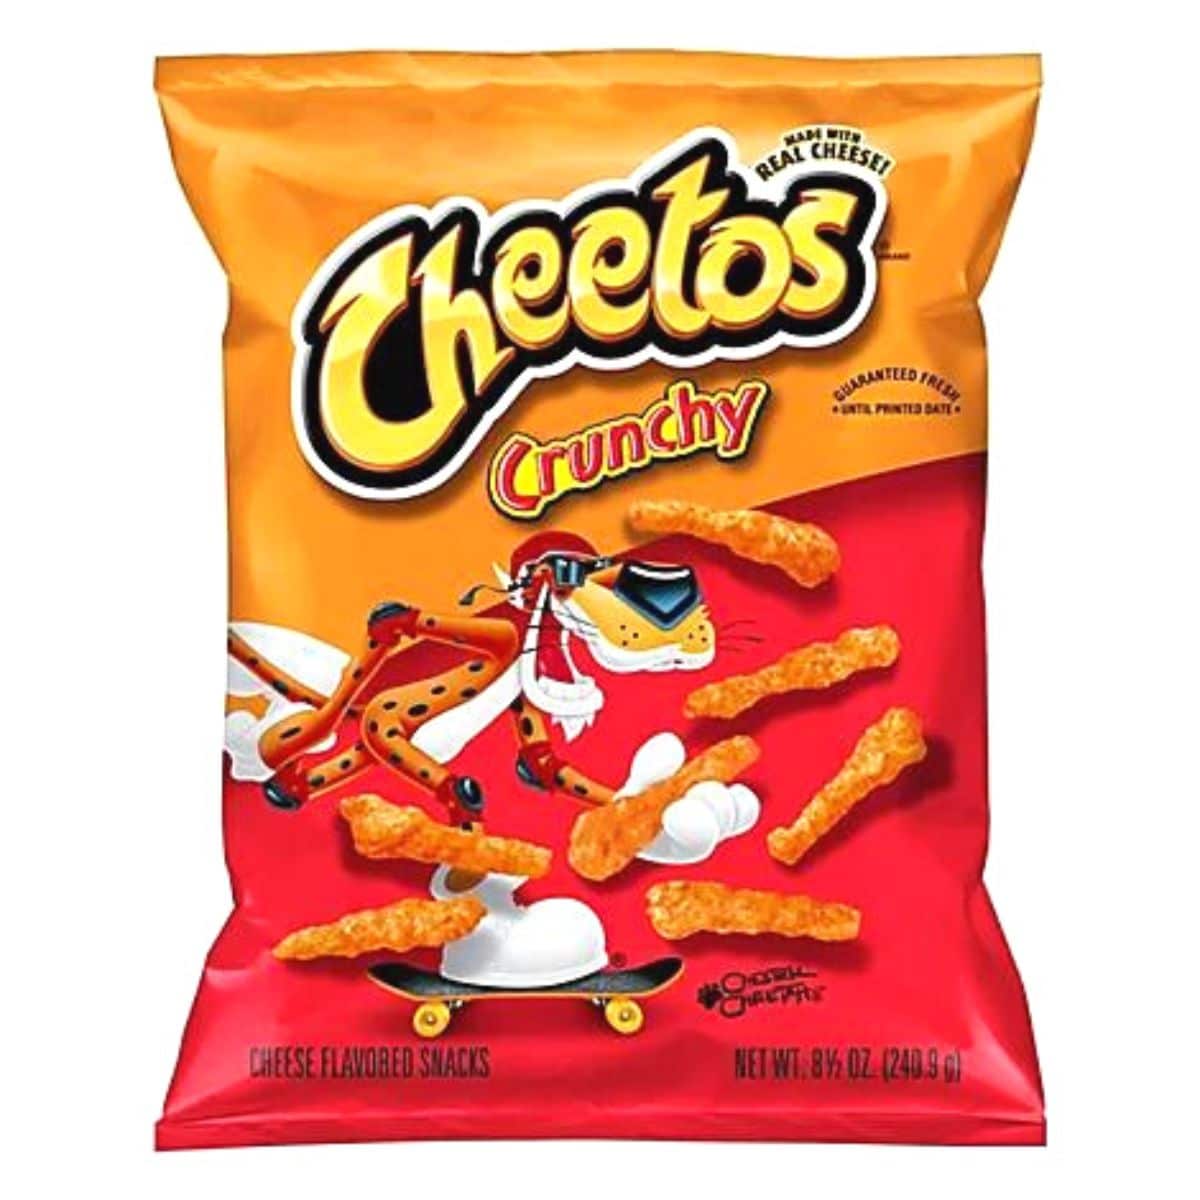 a bag of cheetos.